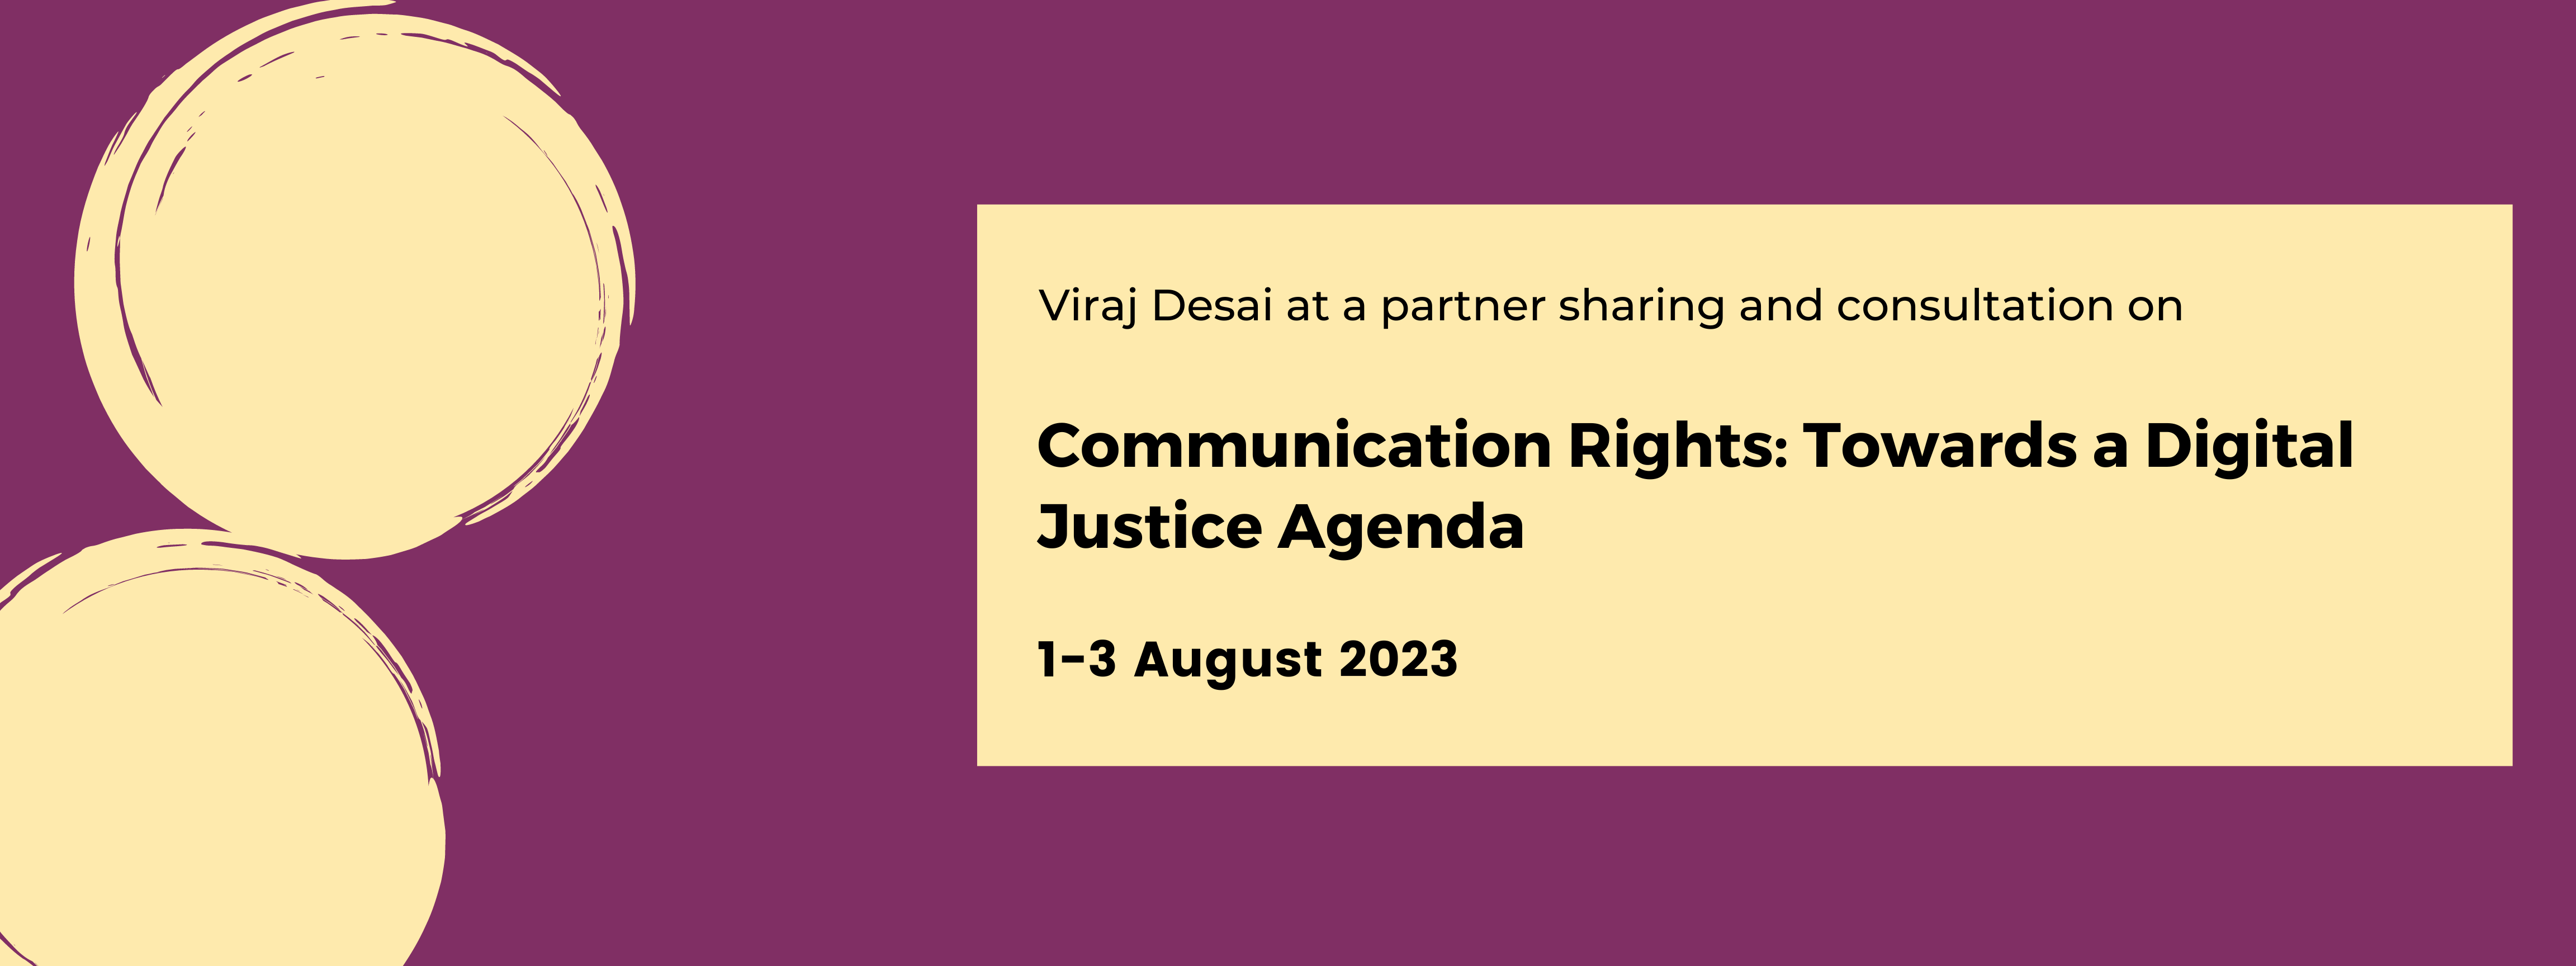 Communication Rights: Towards a Digital Justice Agenda